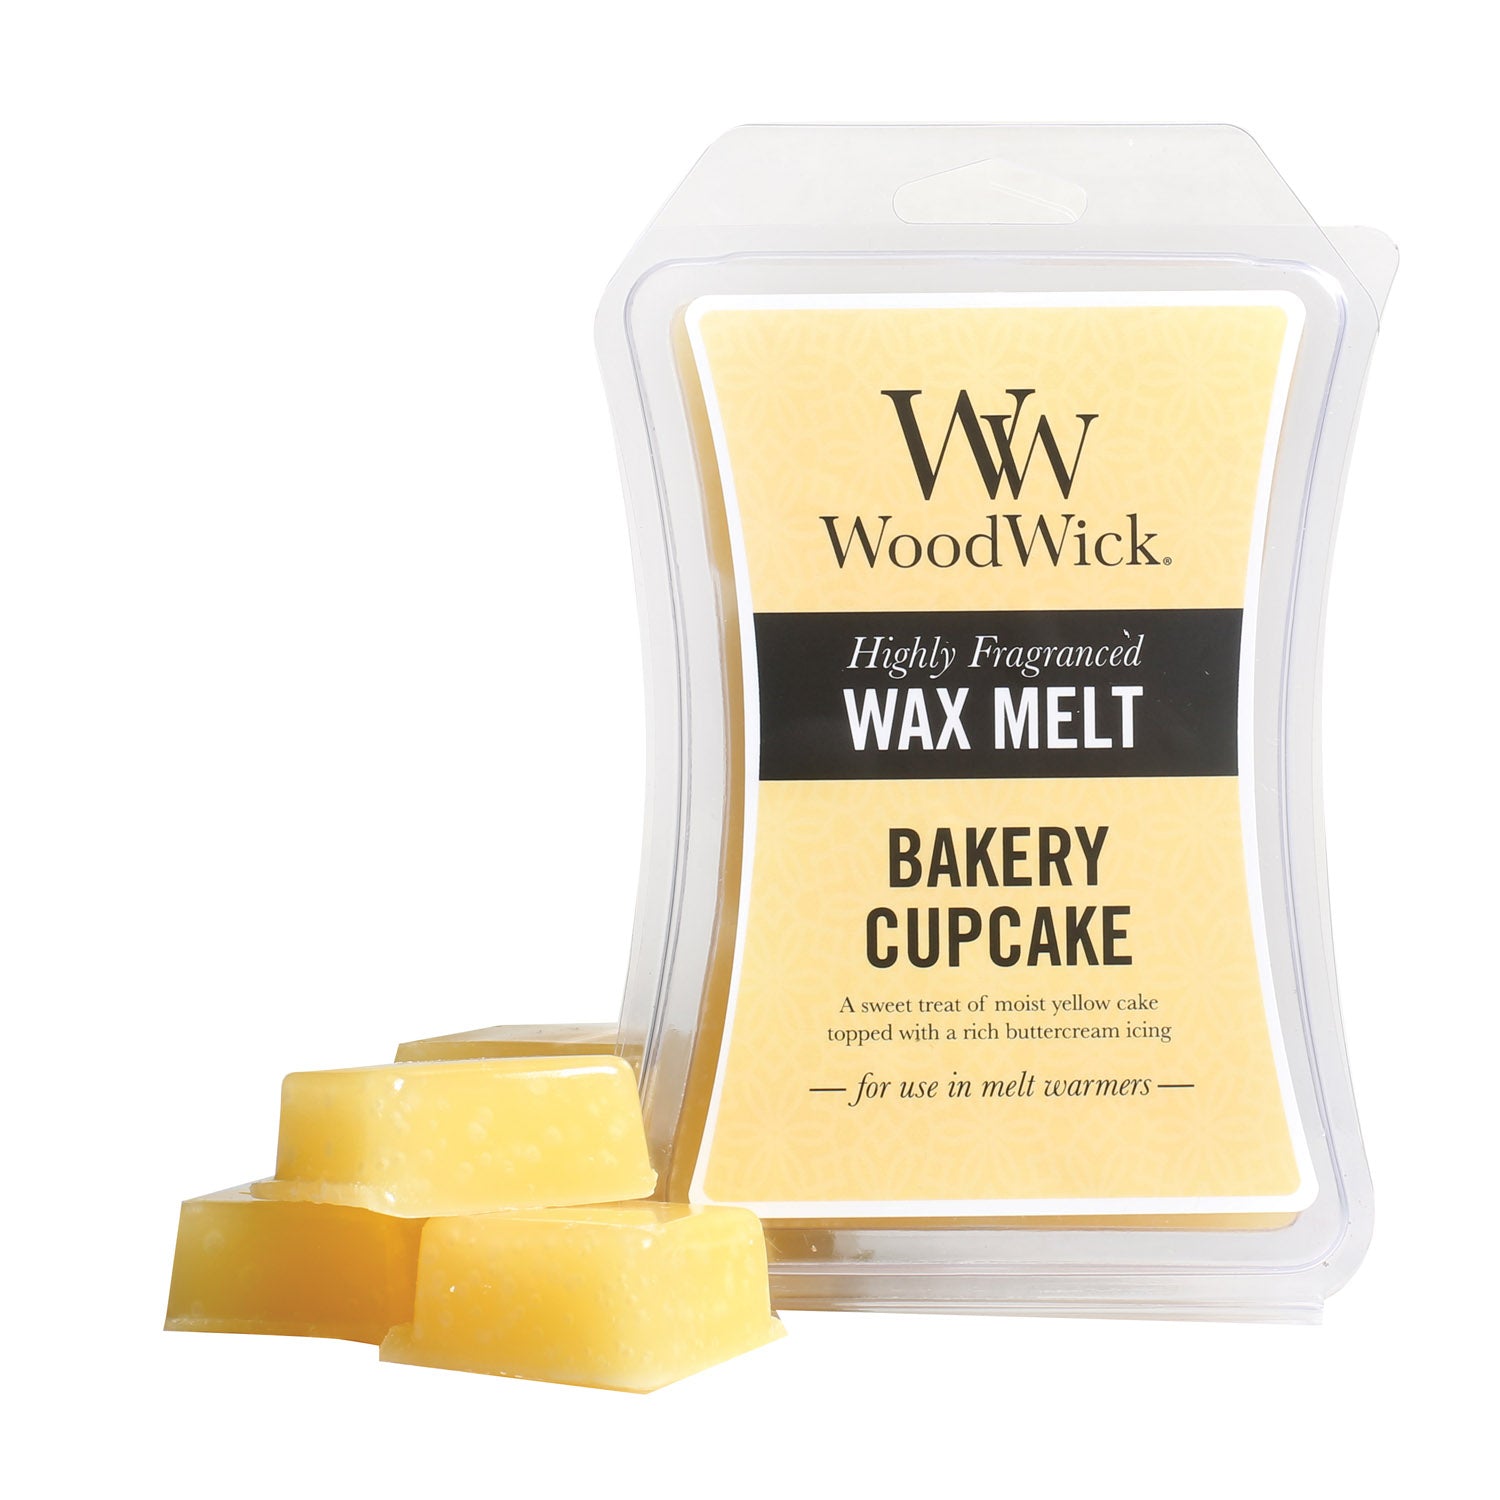 WOODWICK BAKERY CUPCAKE WAX MELT - Gifts R Us